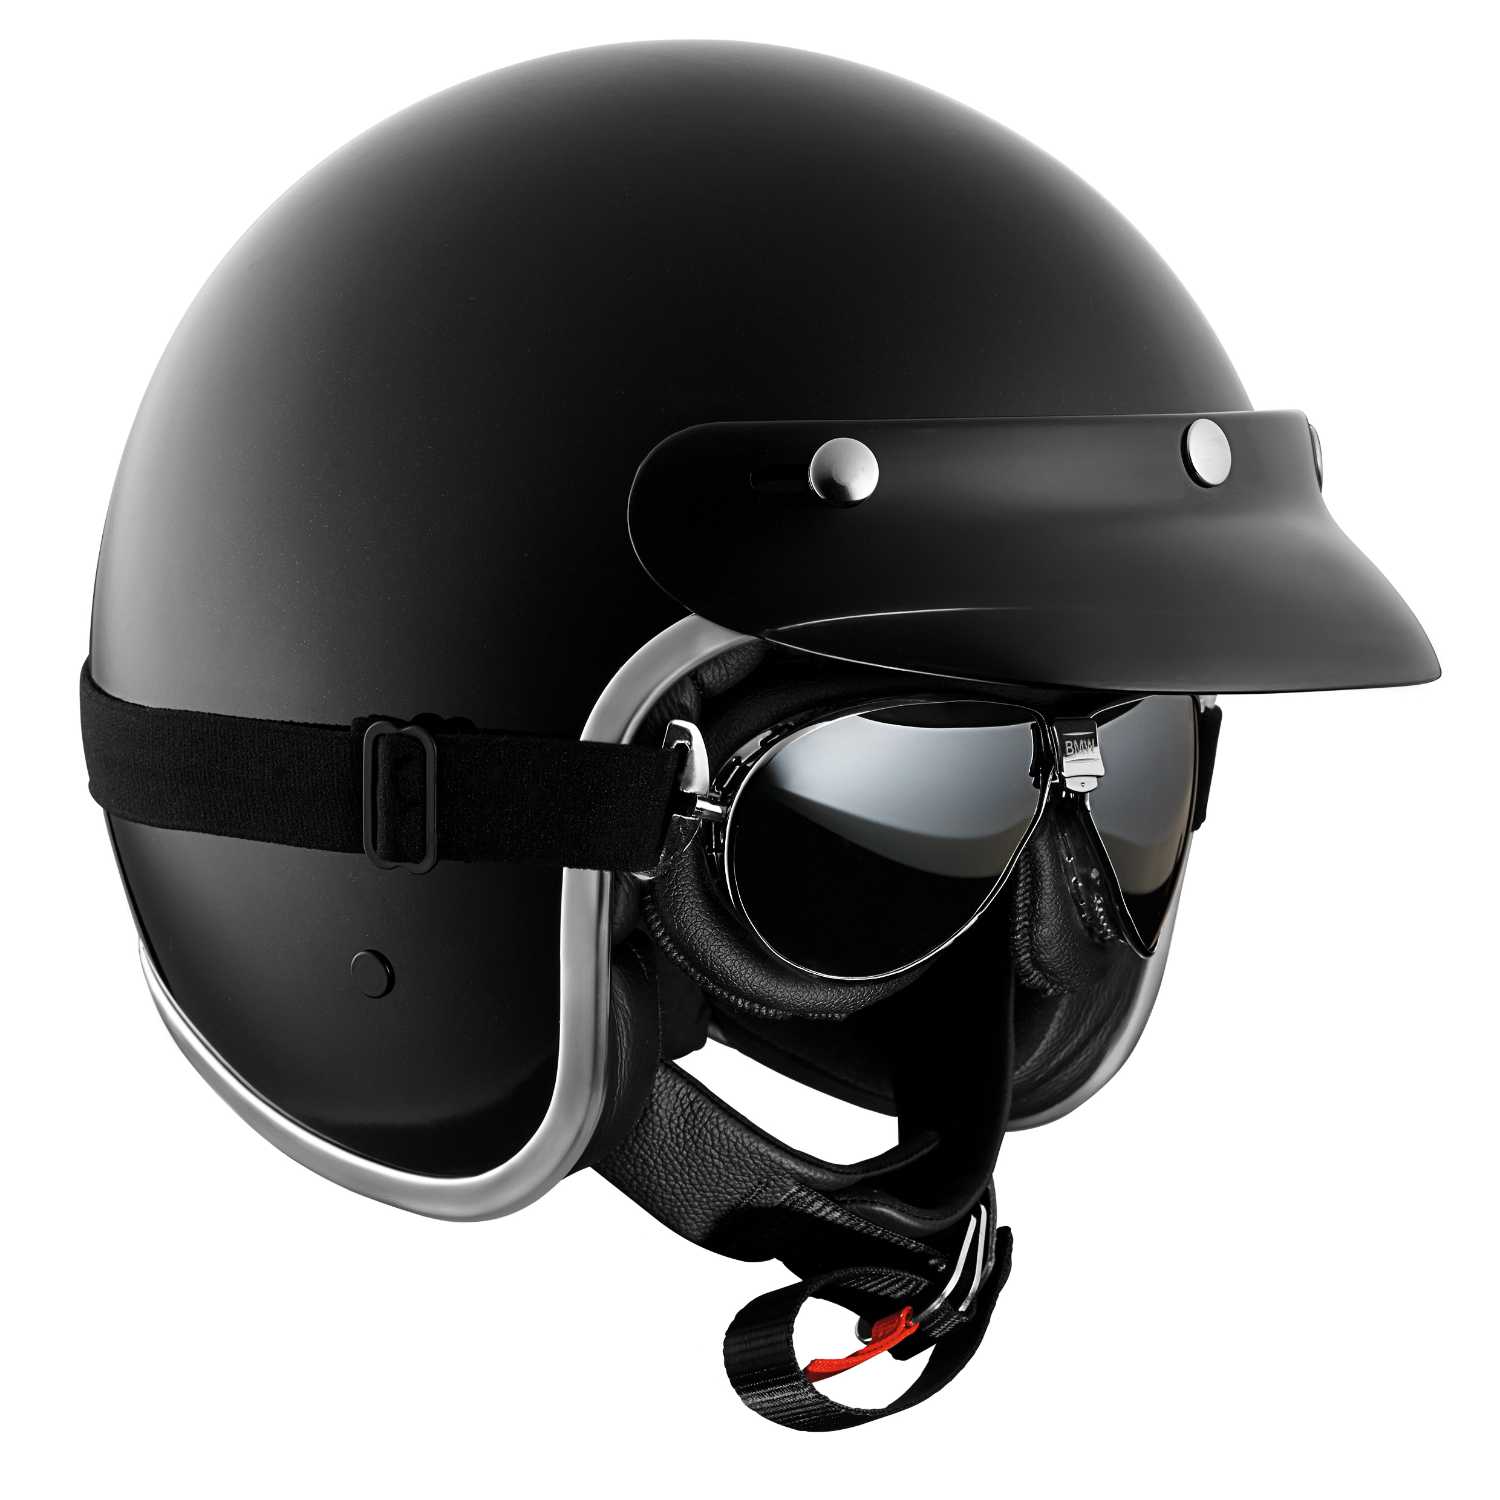 BMW Motorrad Rider's Equipment Ride 2014, Legend helmet (11/2013)